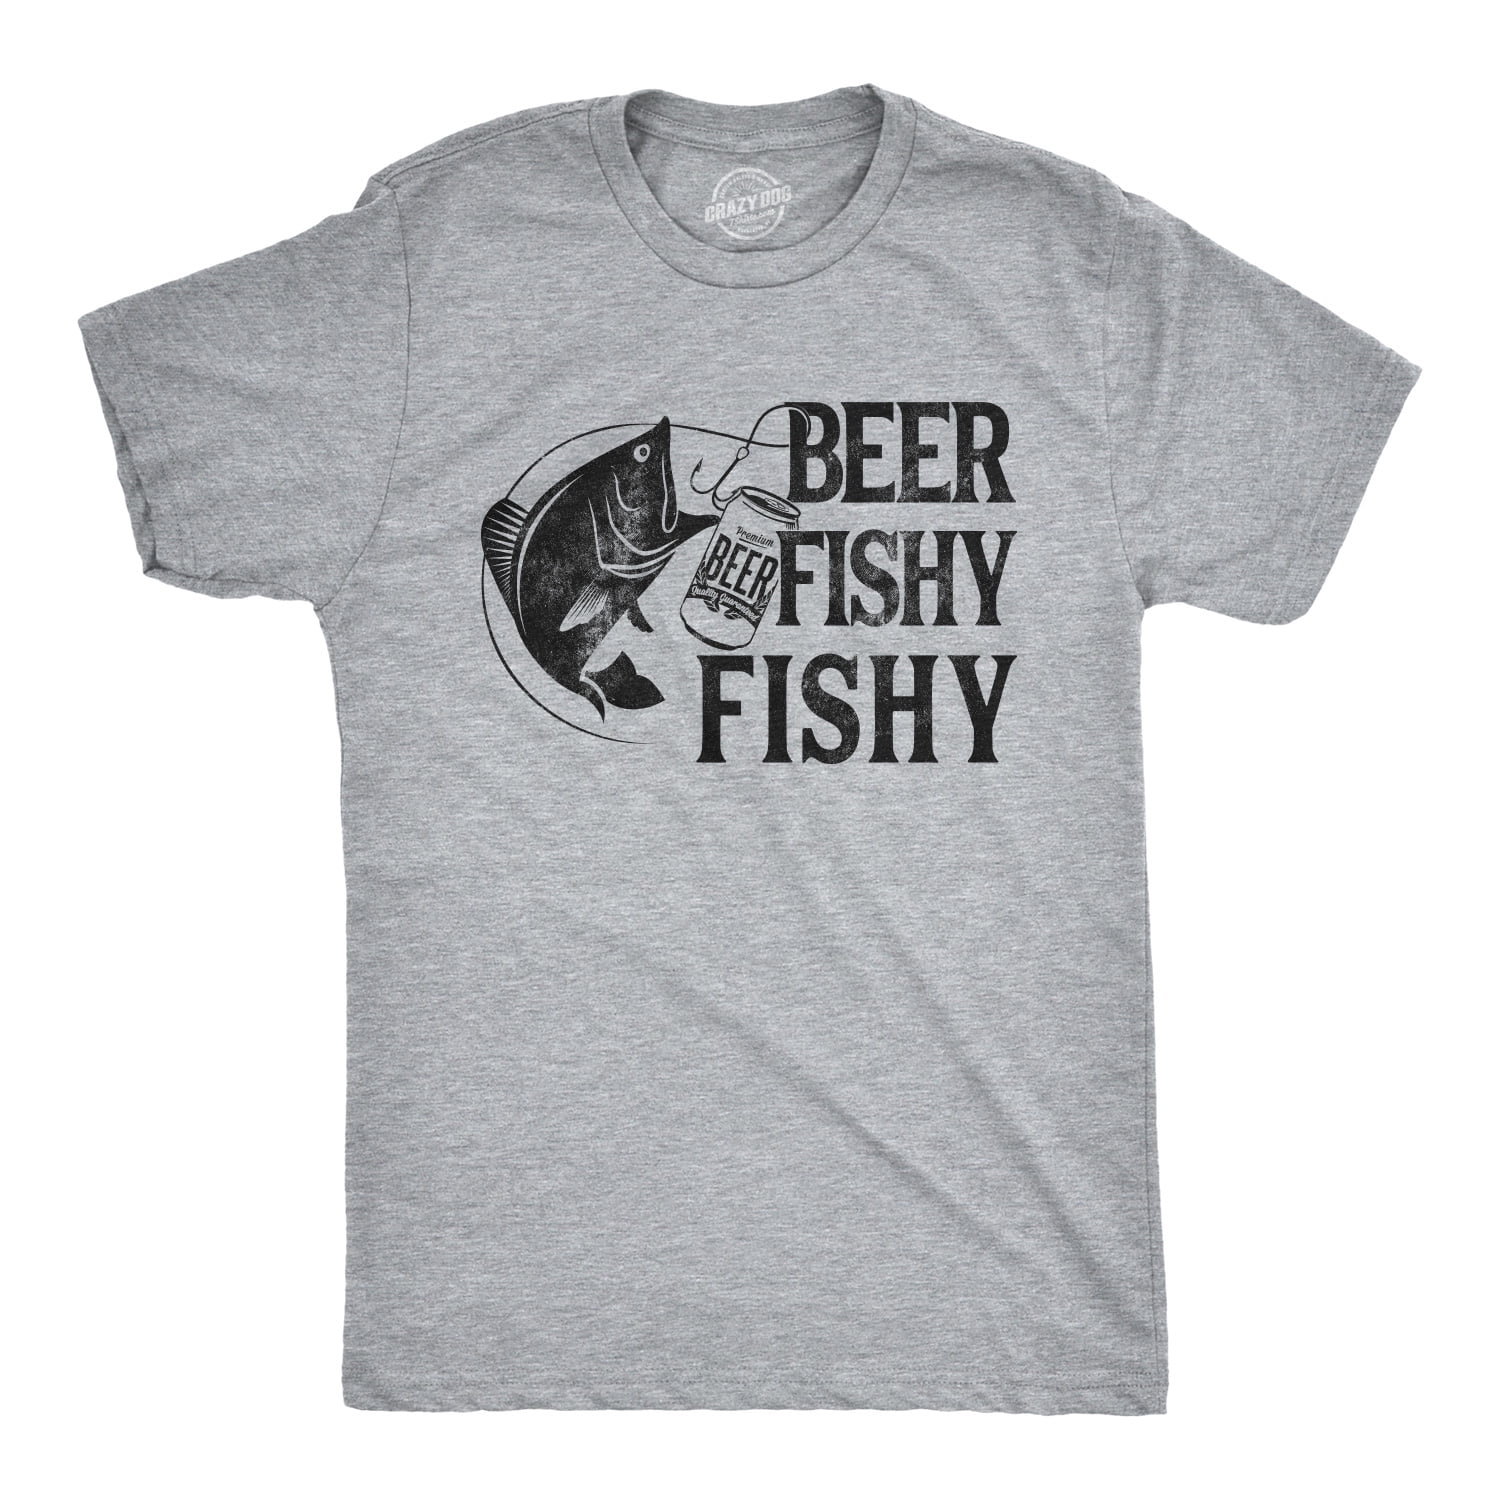 love to fish Here Fishy Fishy Fishy Funny t-shirt